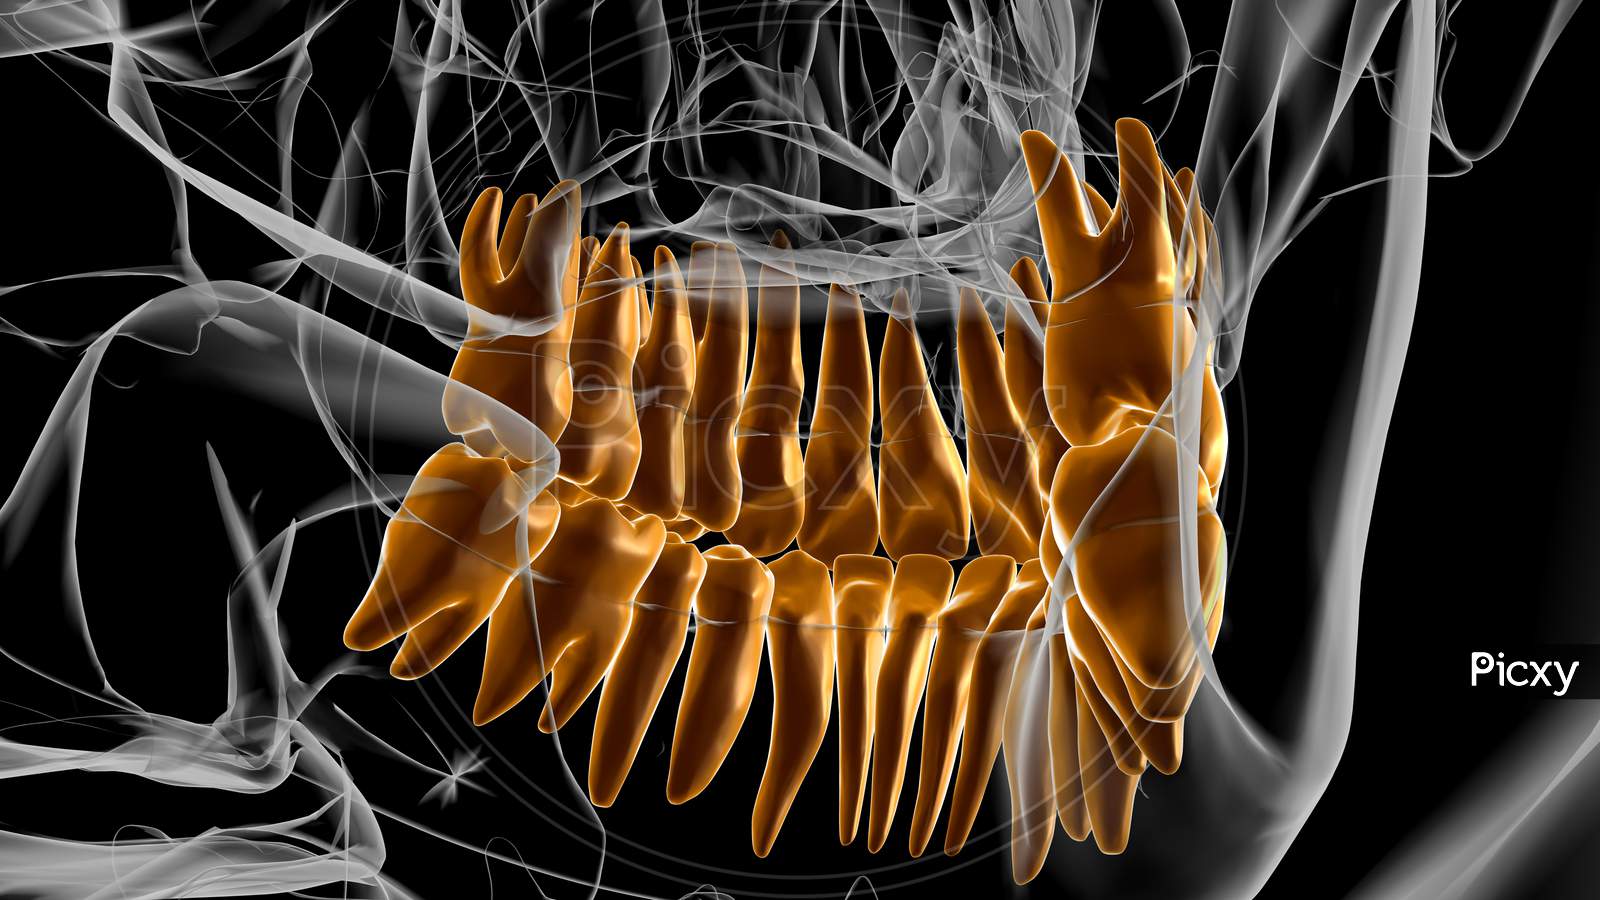 Human Teeth Anatomy 3D Illustration For Medical